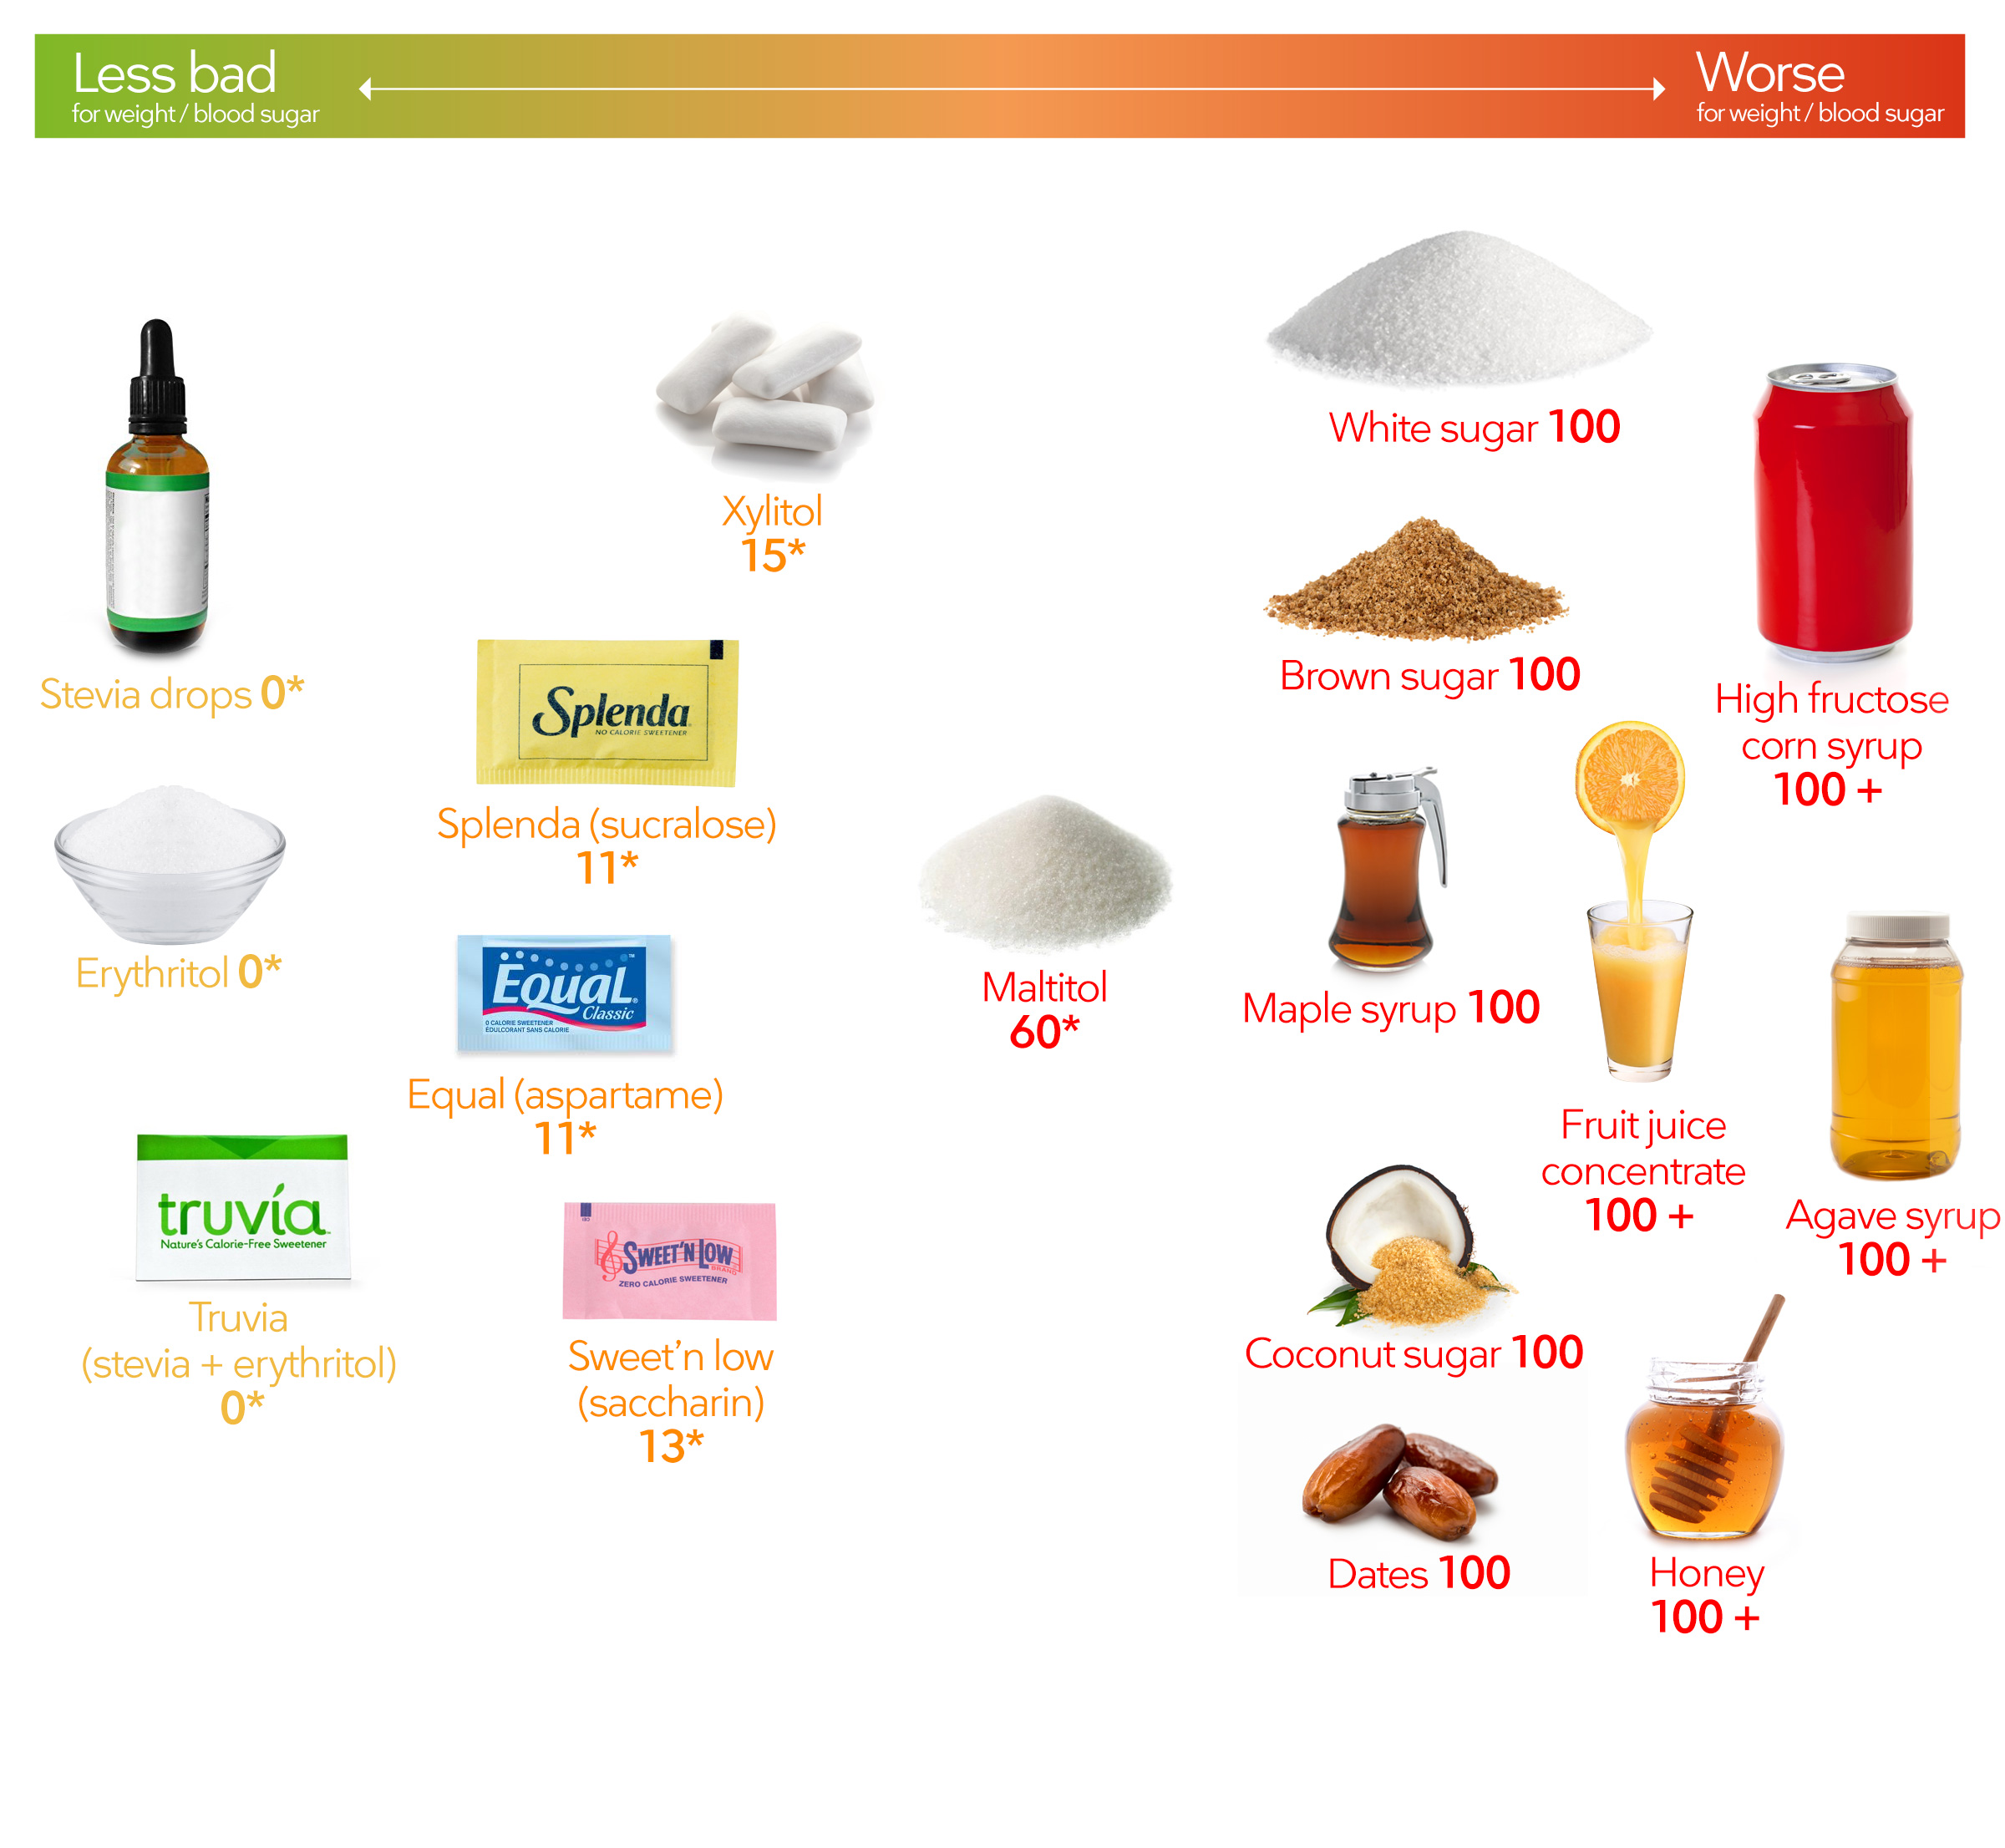 Sugar Substitute Chart